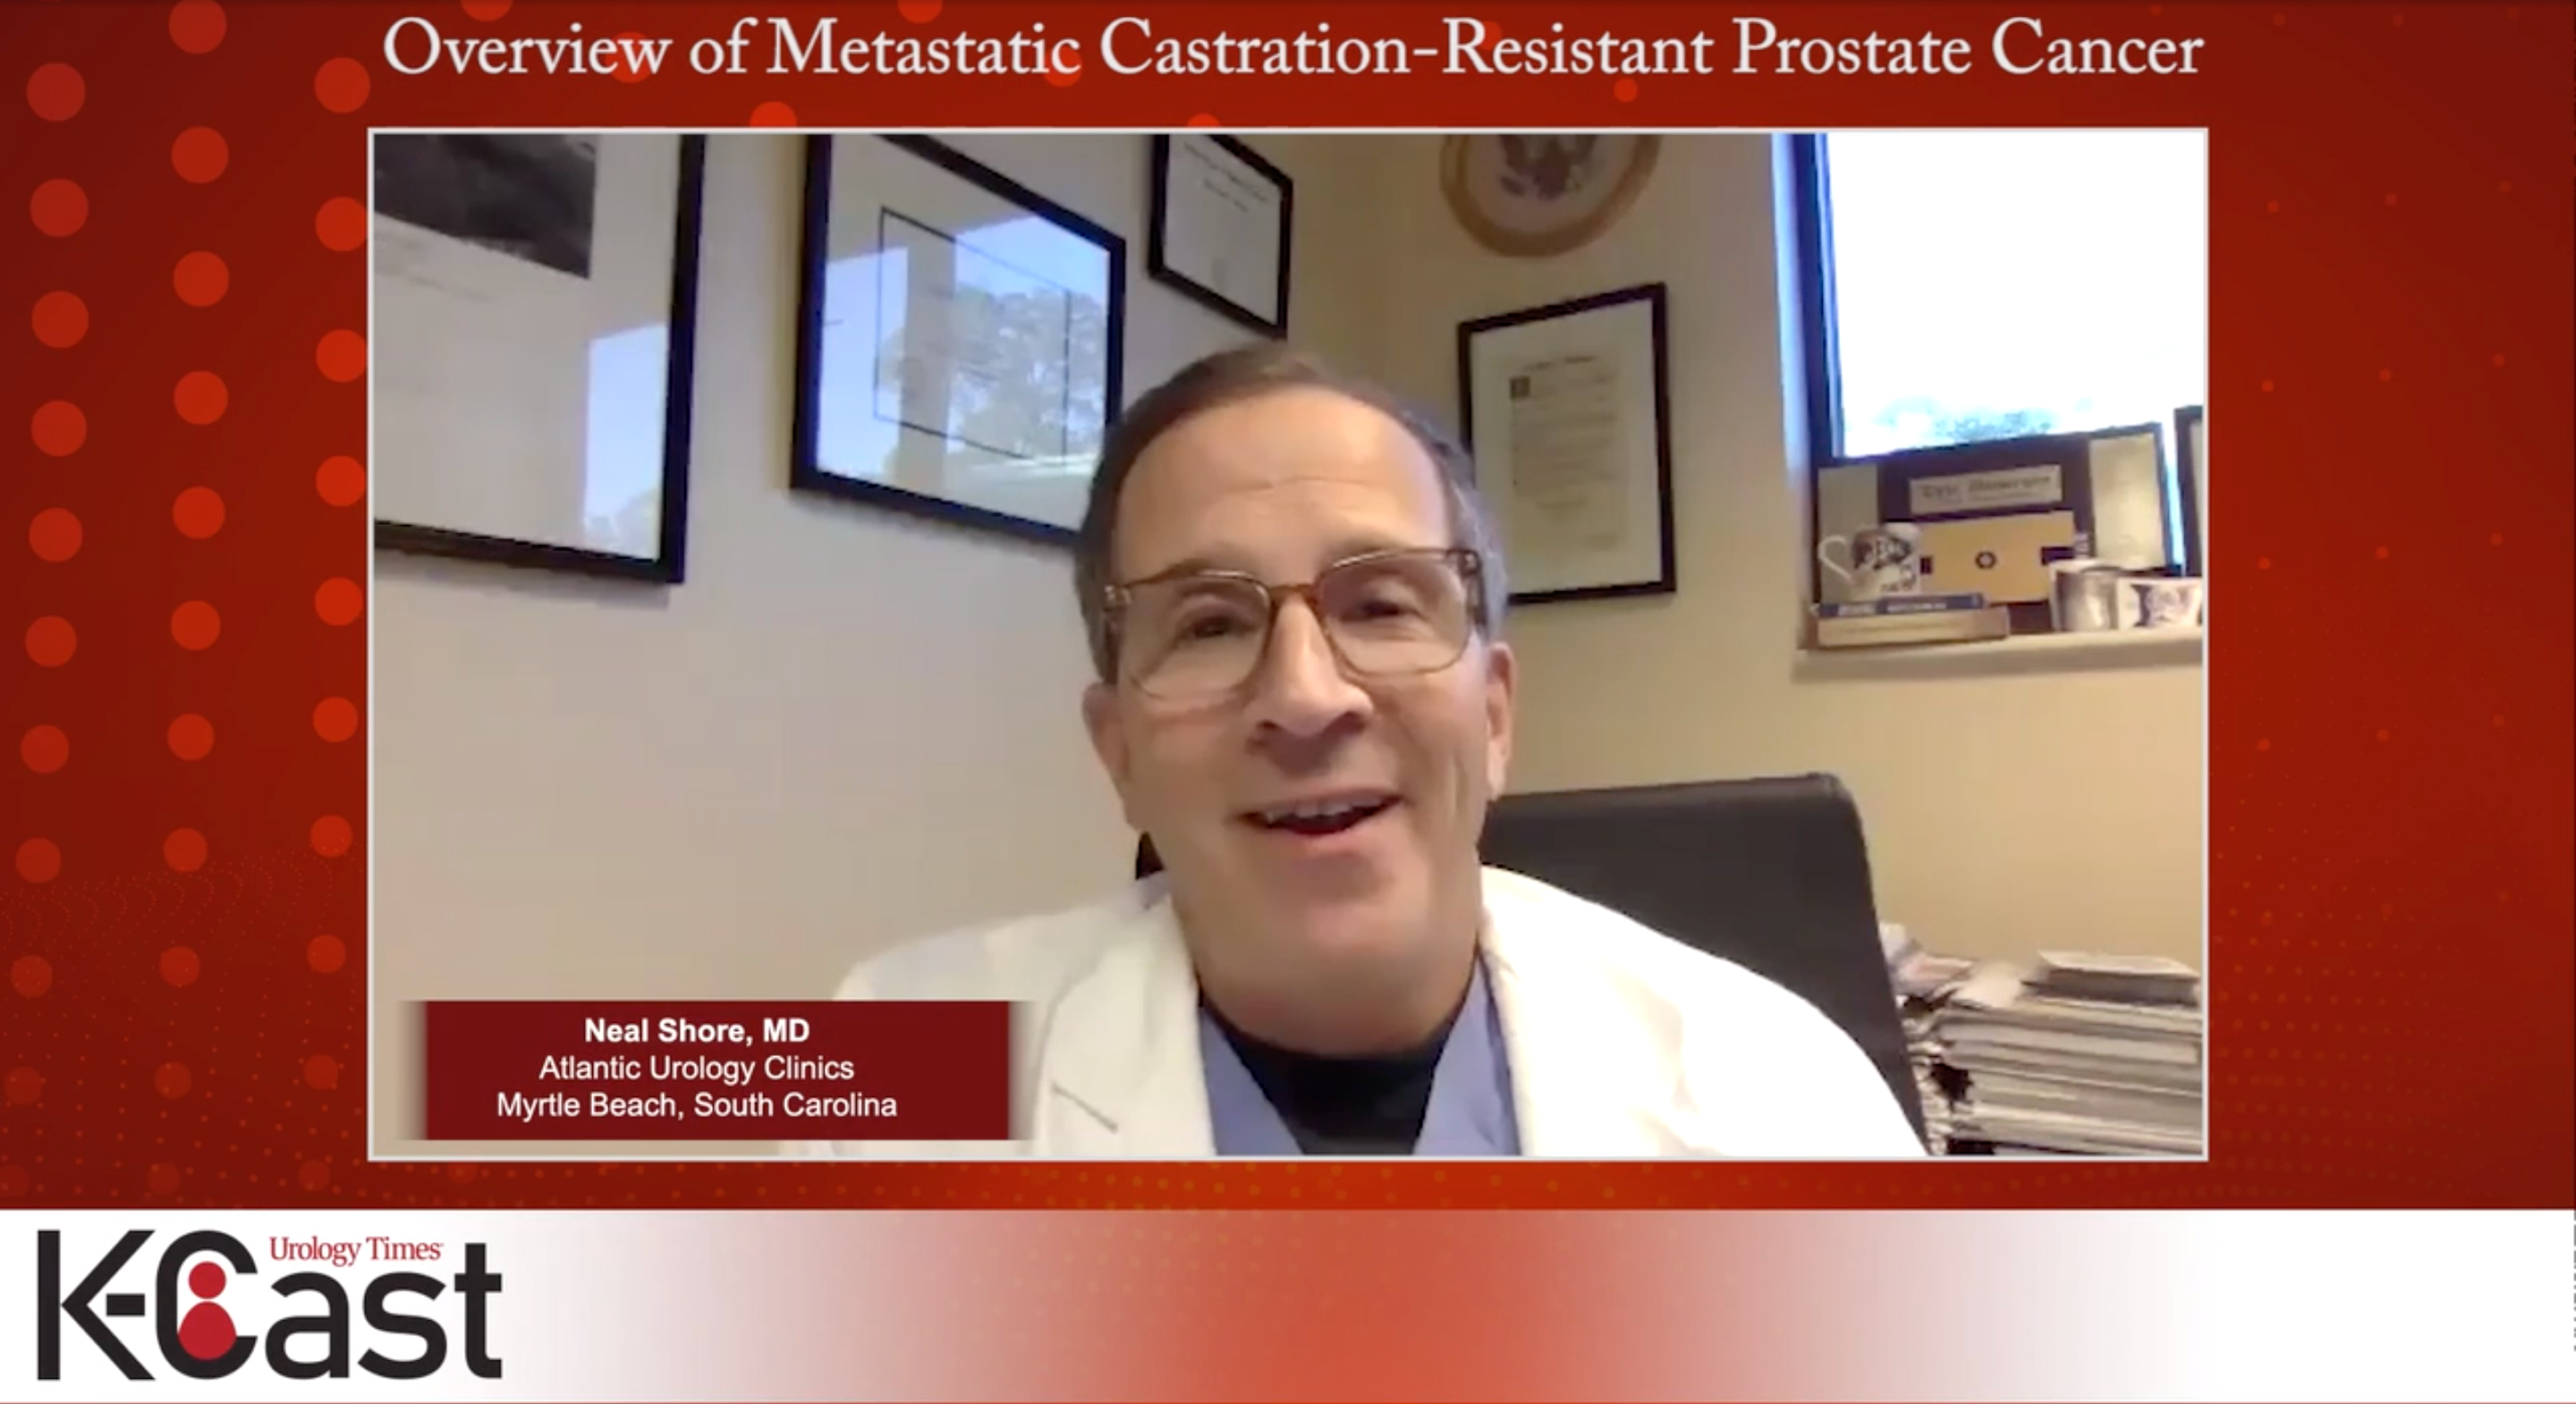 Overview of Metastatic Castration-Resistant Prostate Cancer